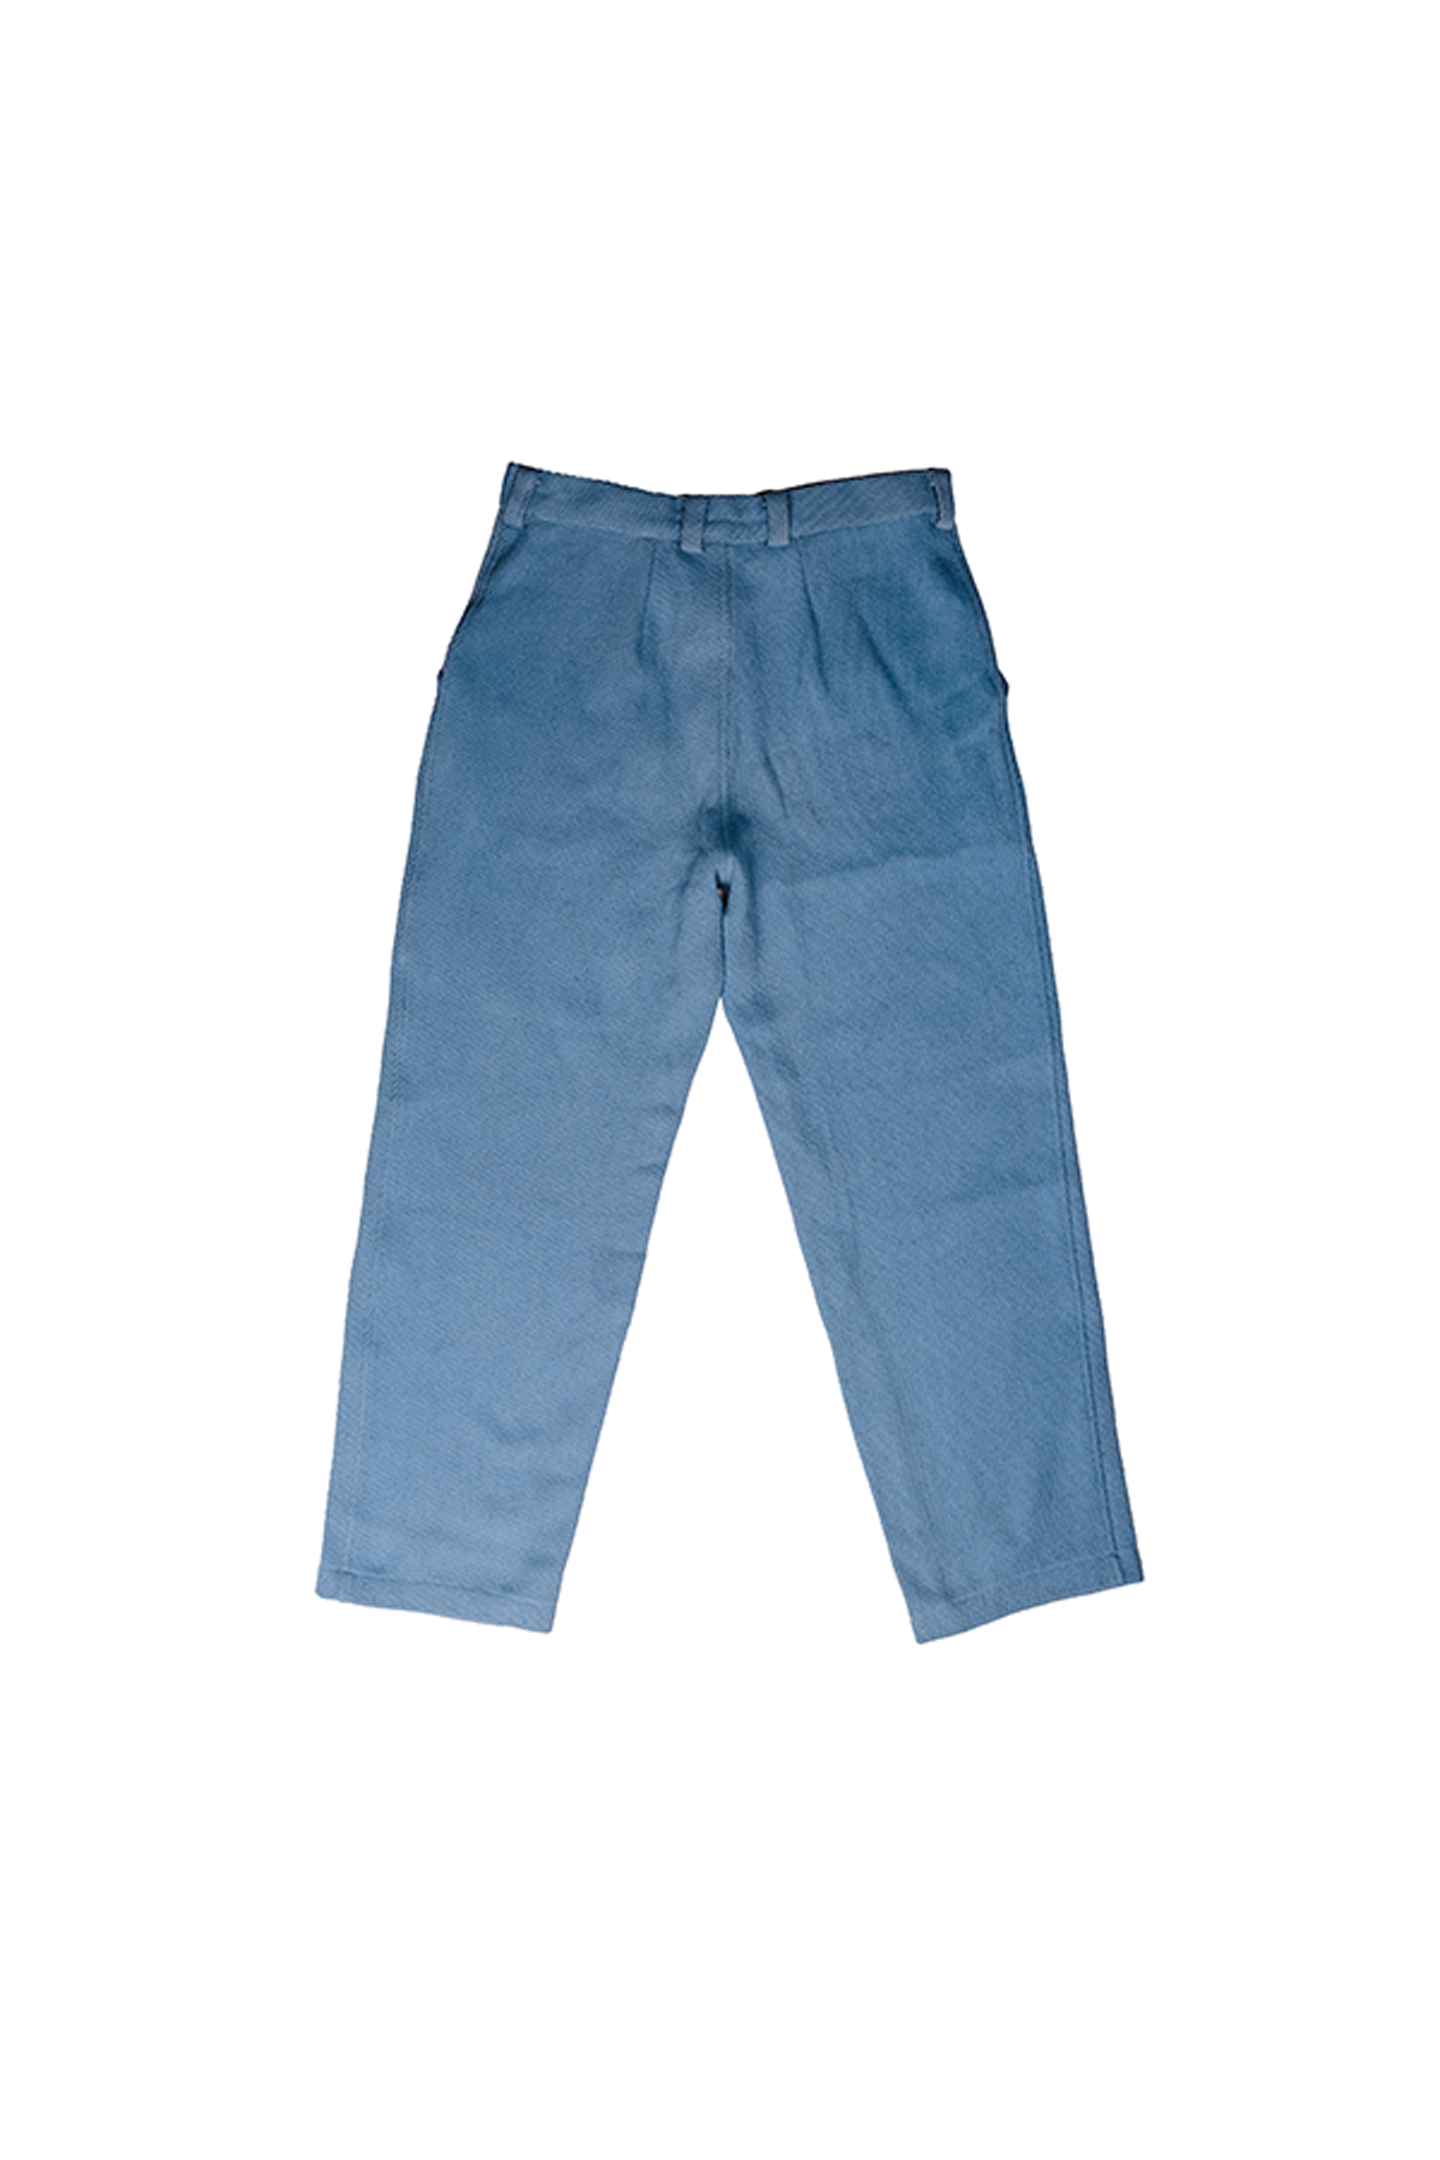 Carolina Blue - Pants